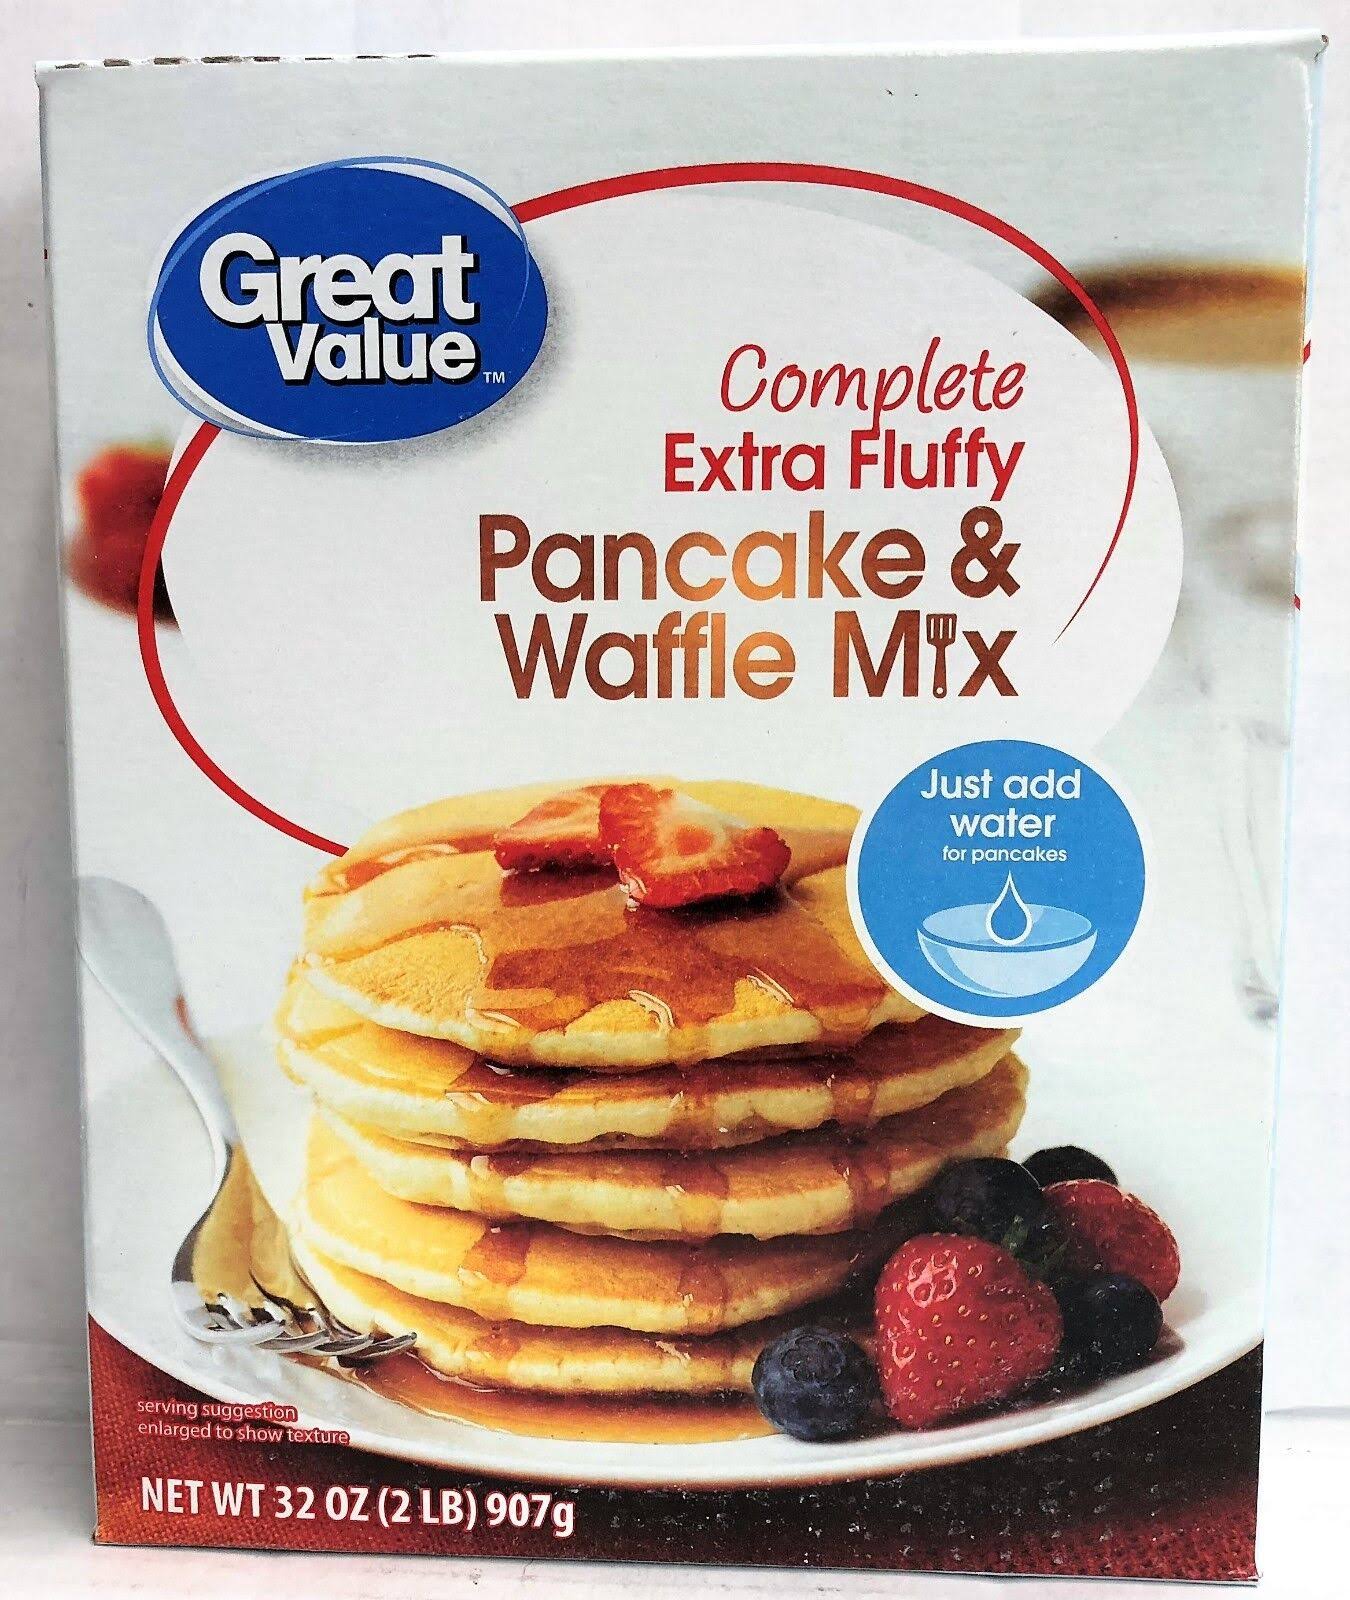 Great Value Pancake & Waffle Mix, Original, Extra Fluffy, Complete - 32 oz